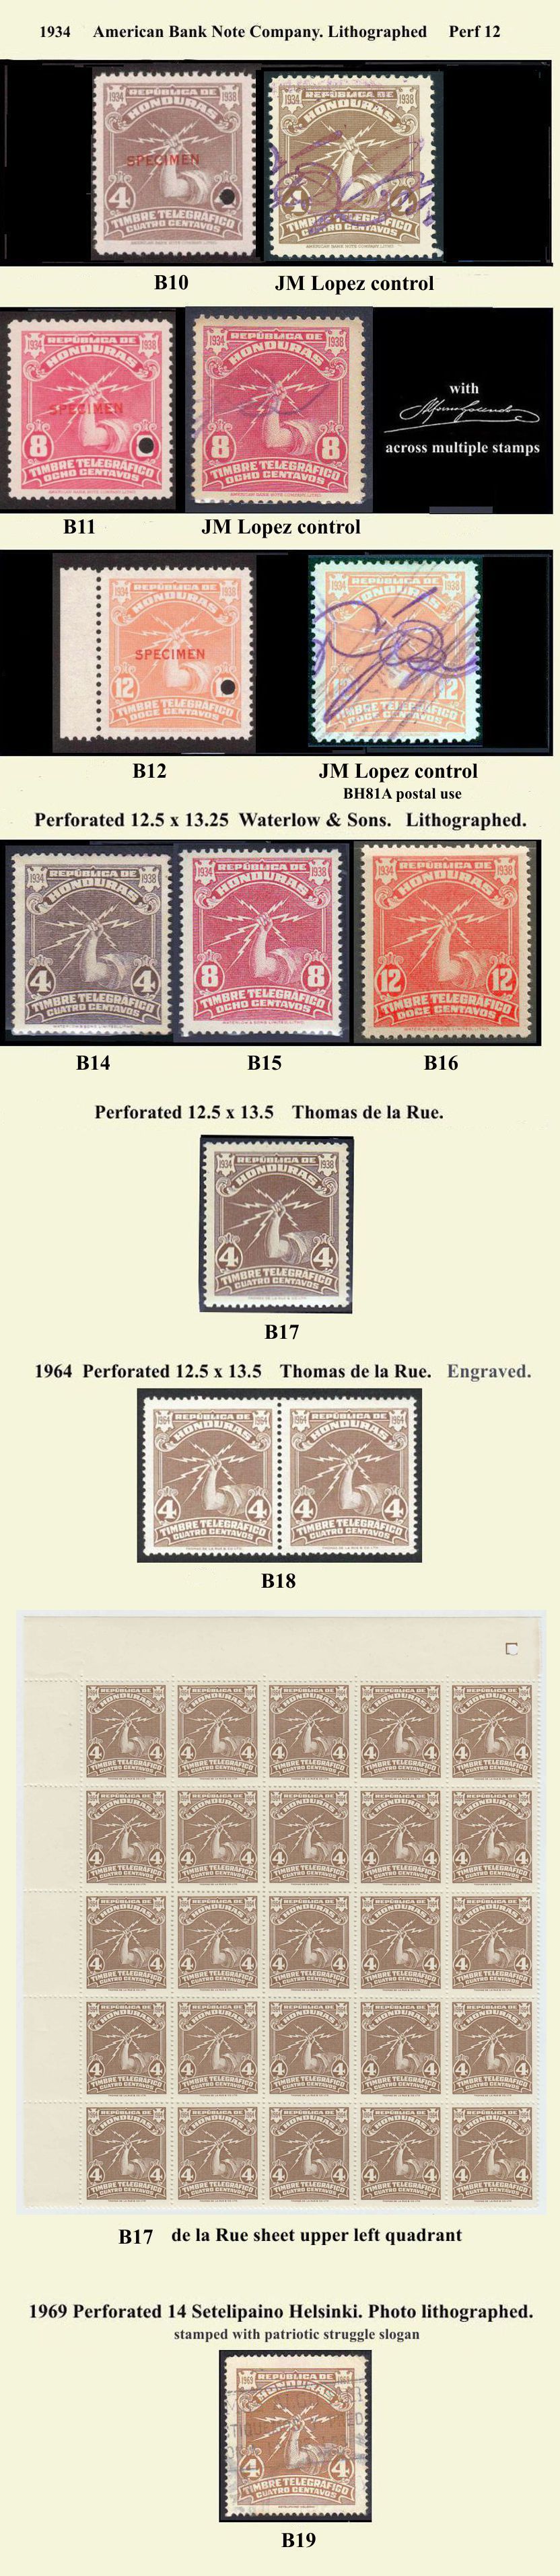 telegraph stamps